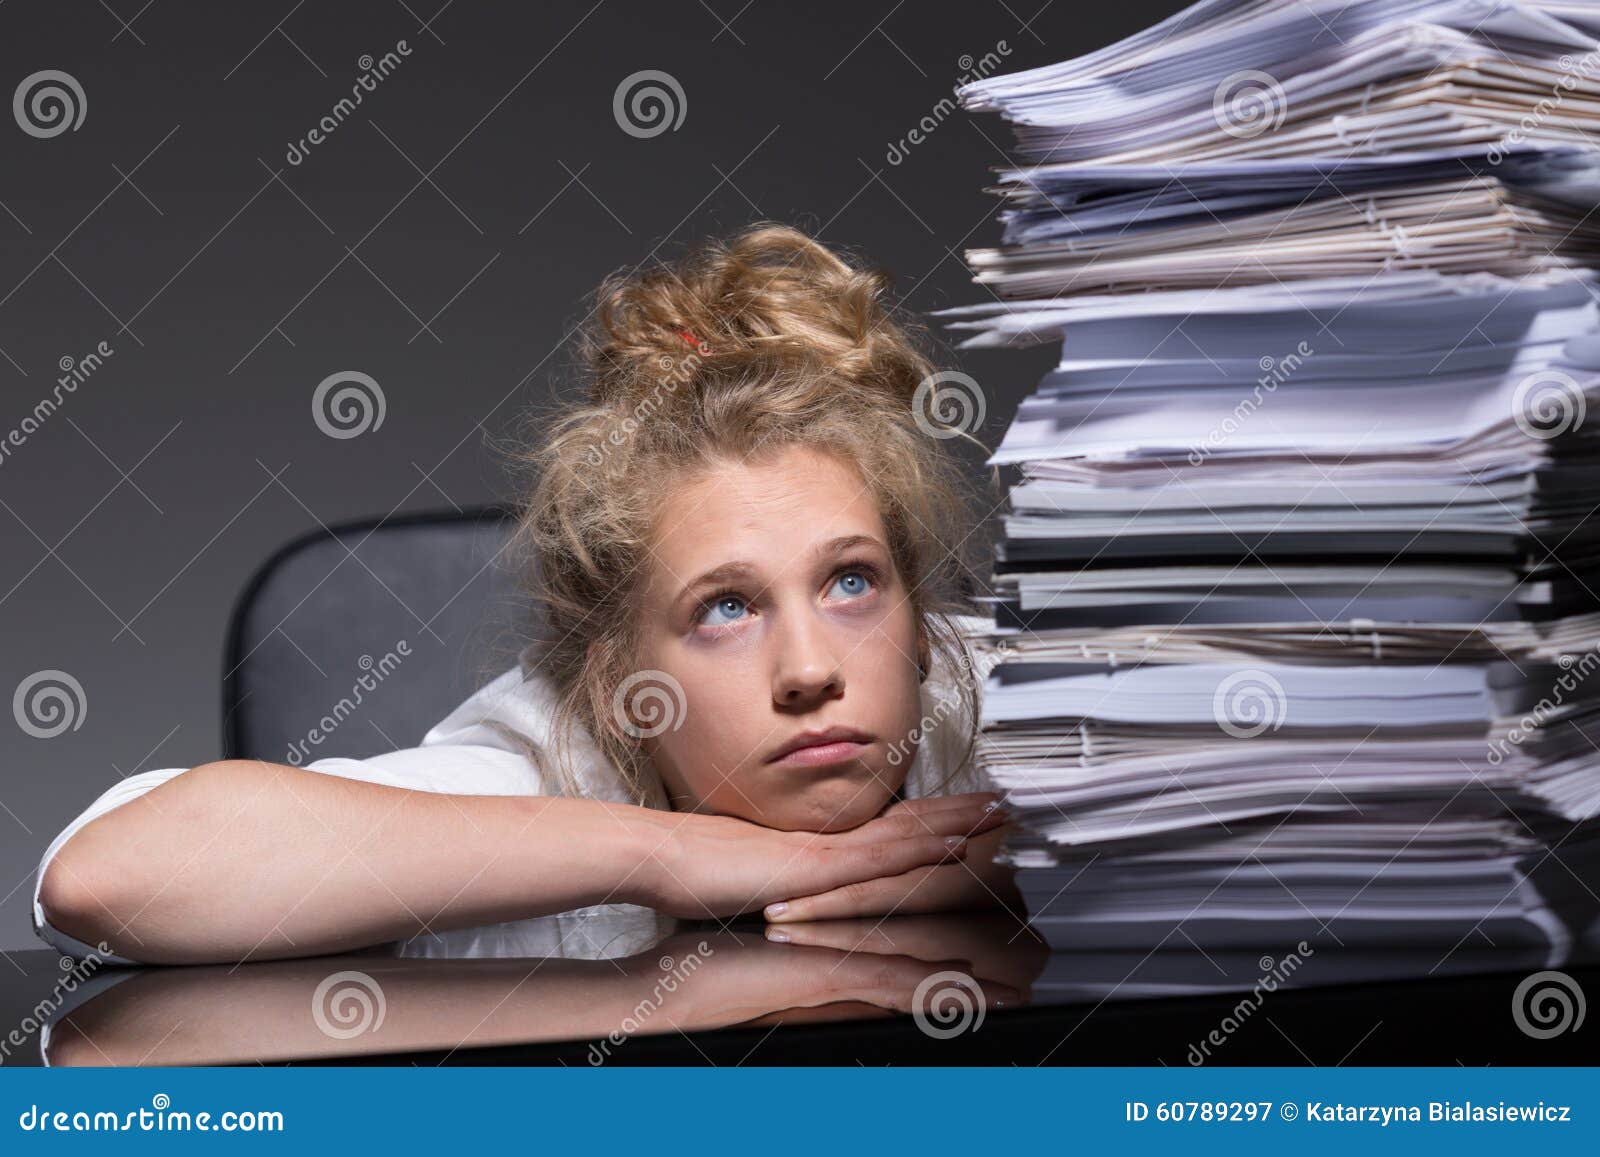 girl overwhelmed by paperwork